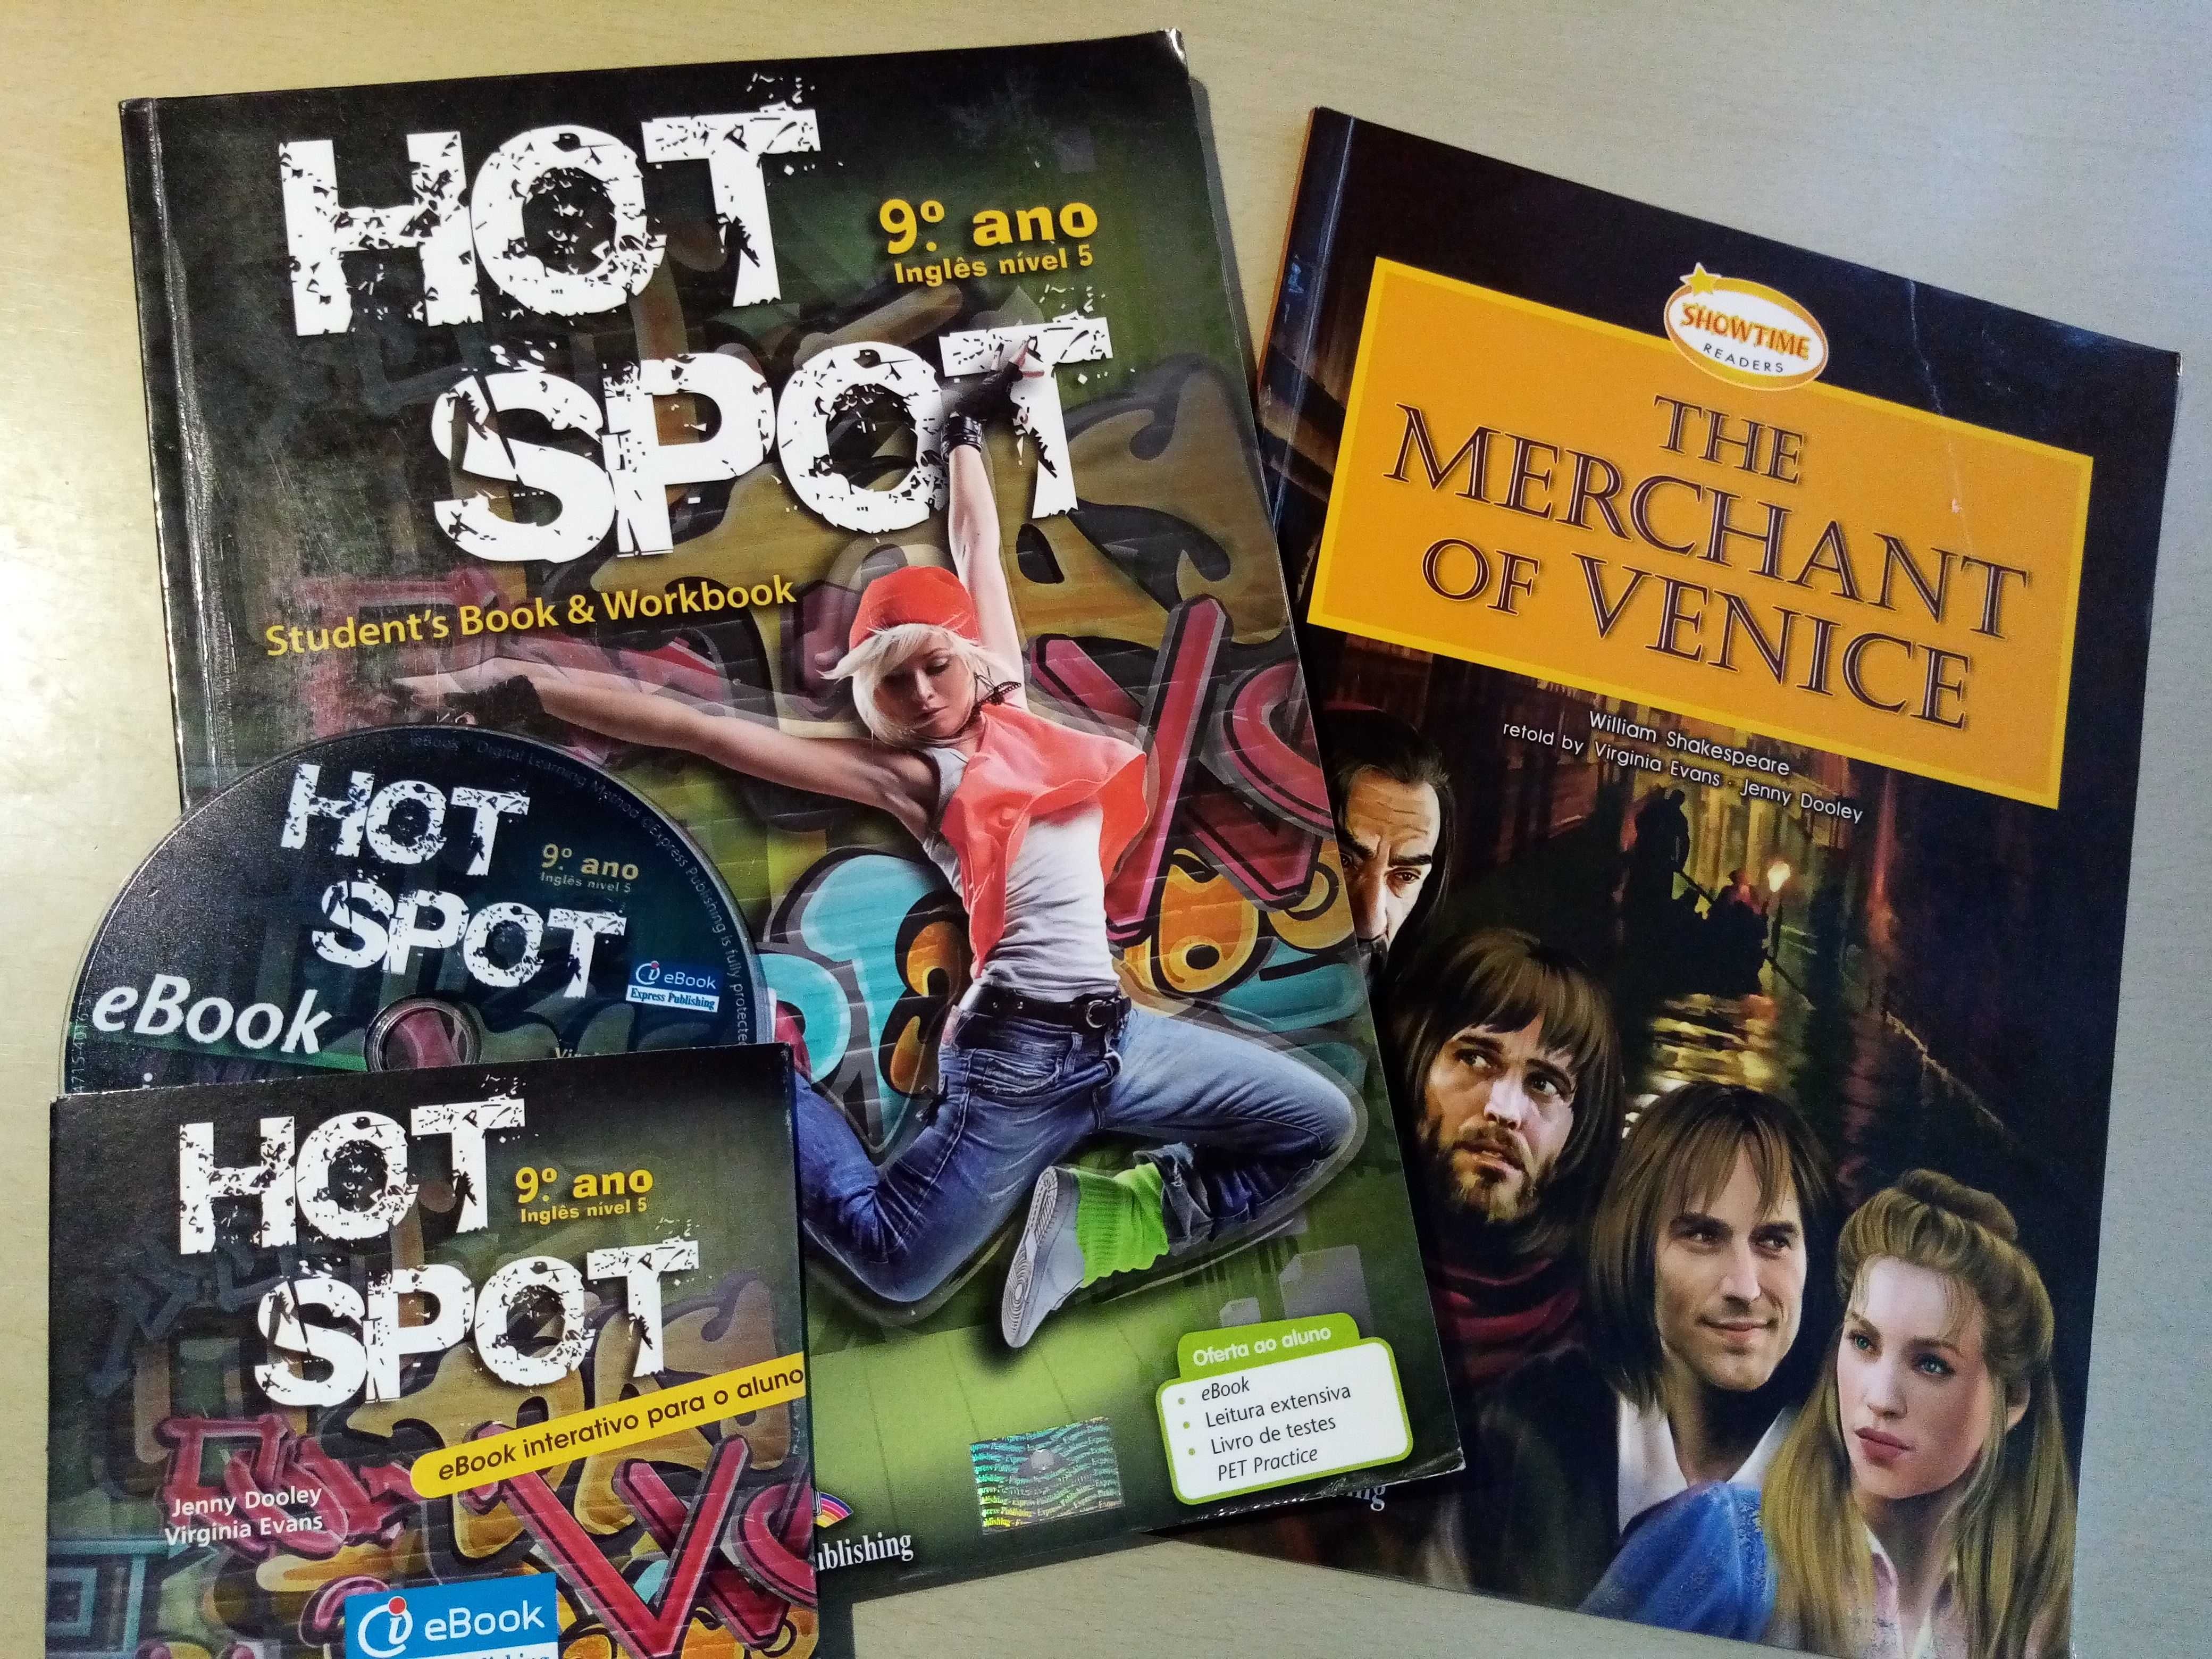 Manual 9 ano de inglês  "Hot Spot" + oferta de CD e leitura extensiva